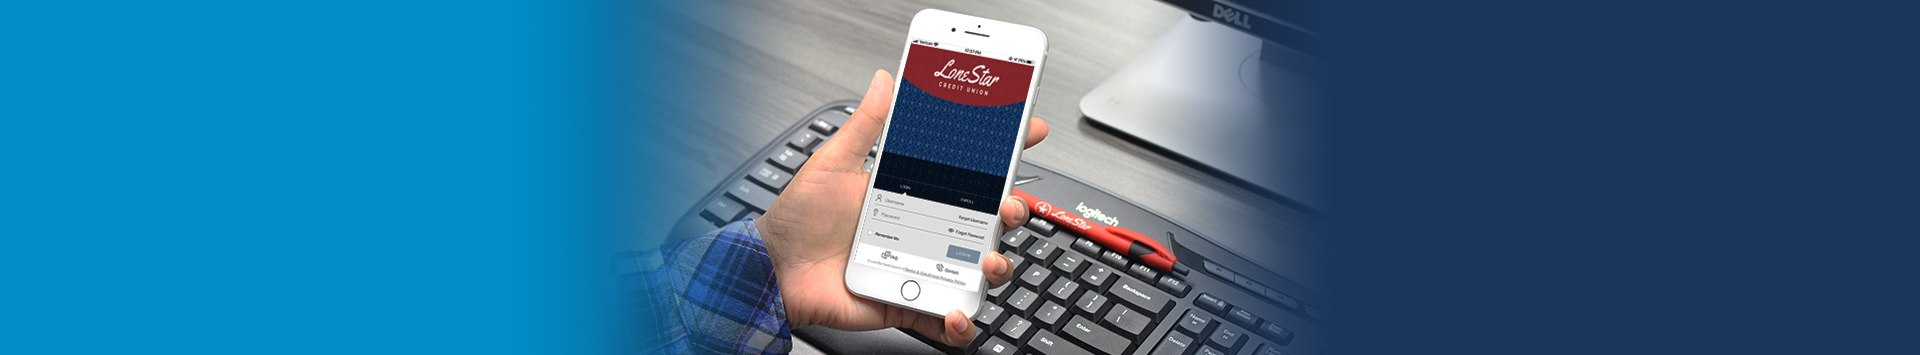 LSCU Cards App Web Banner.jpg